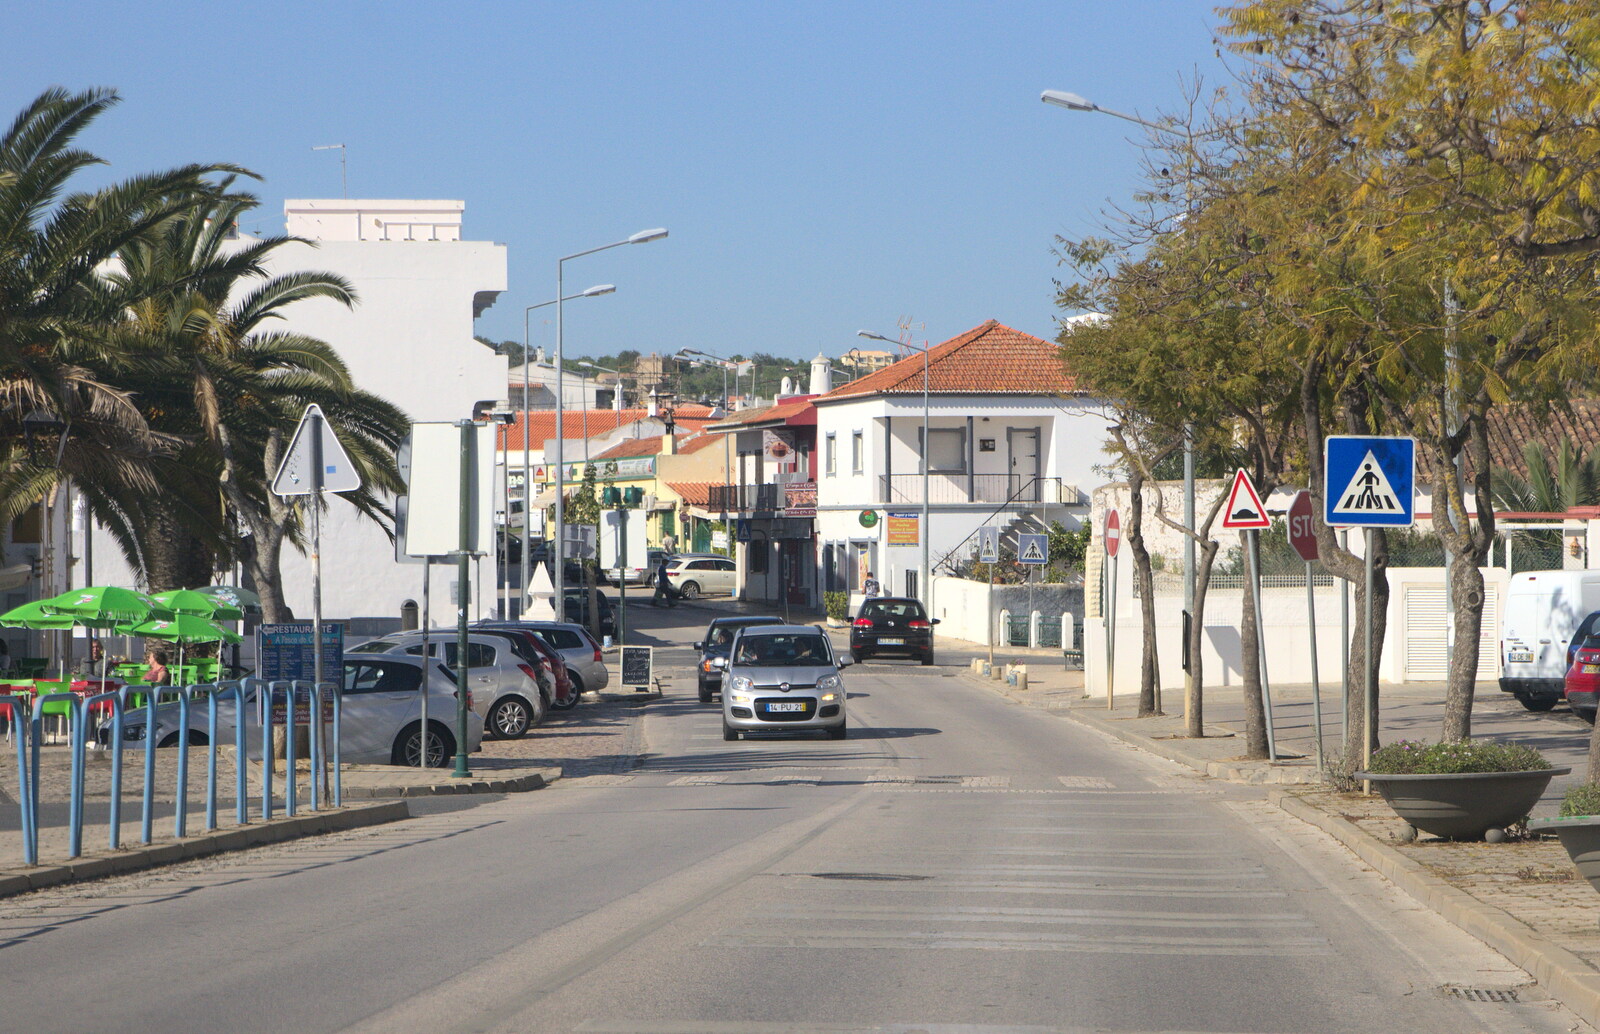 Some random Portuguese street from Gary and Vanessa's Barbeque, Alcantarilha, Algarve, Portugal - 7th April 2016